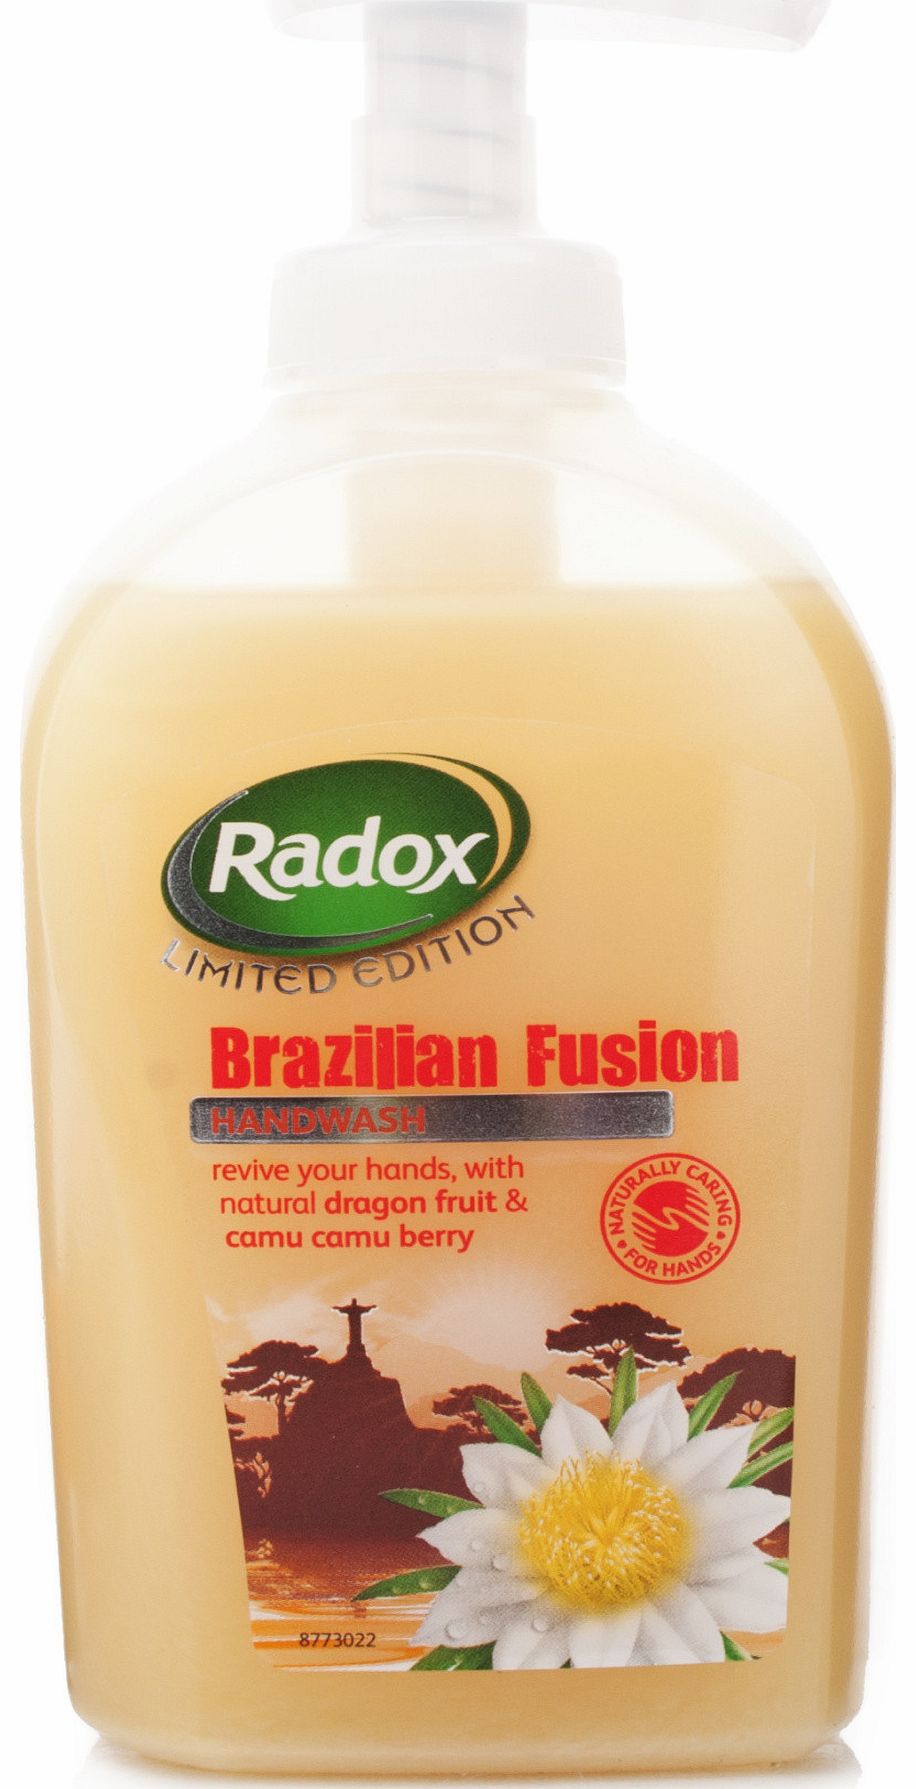 Brazilian Fusion Limited Edition Handwash